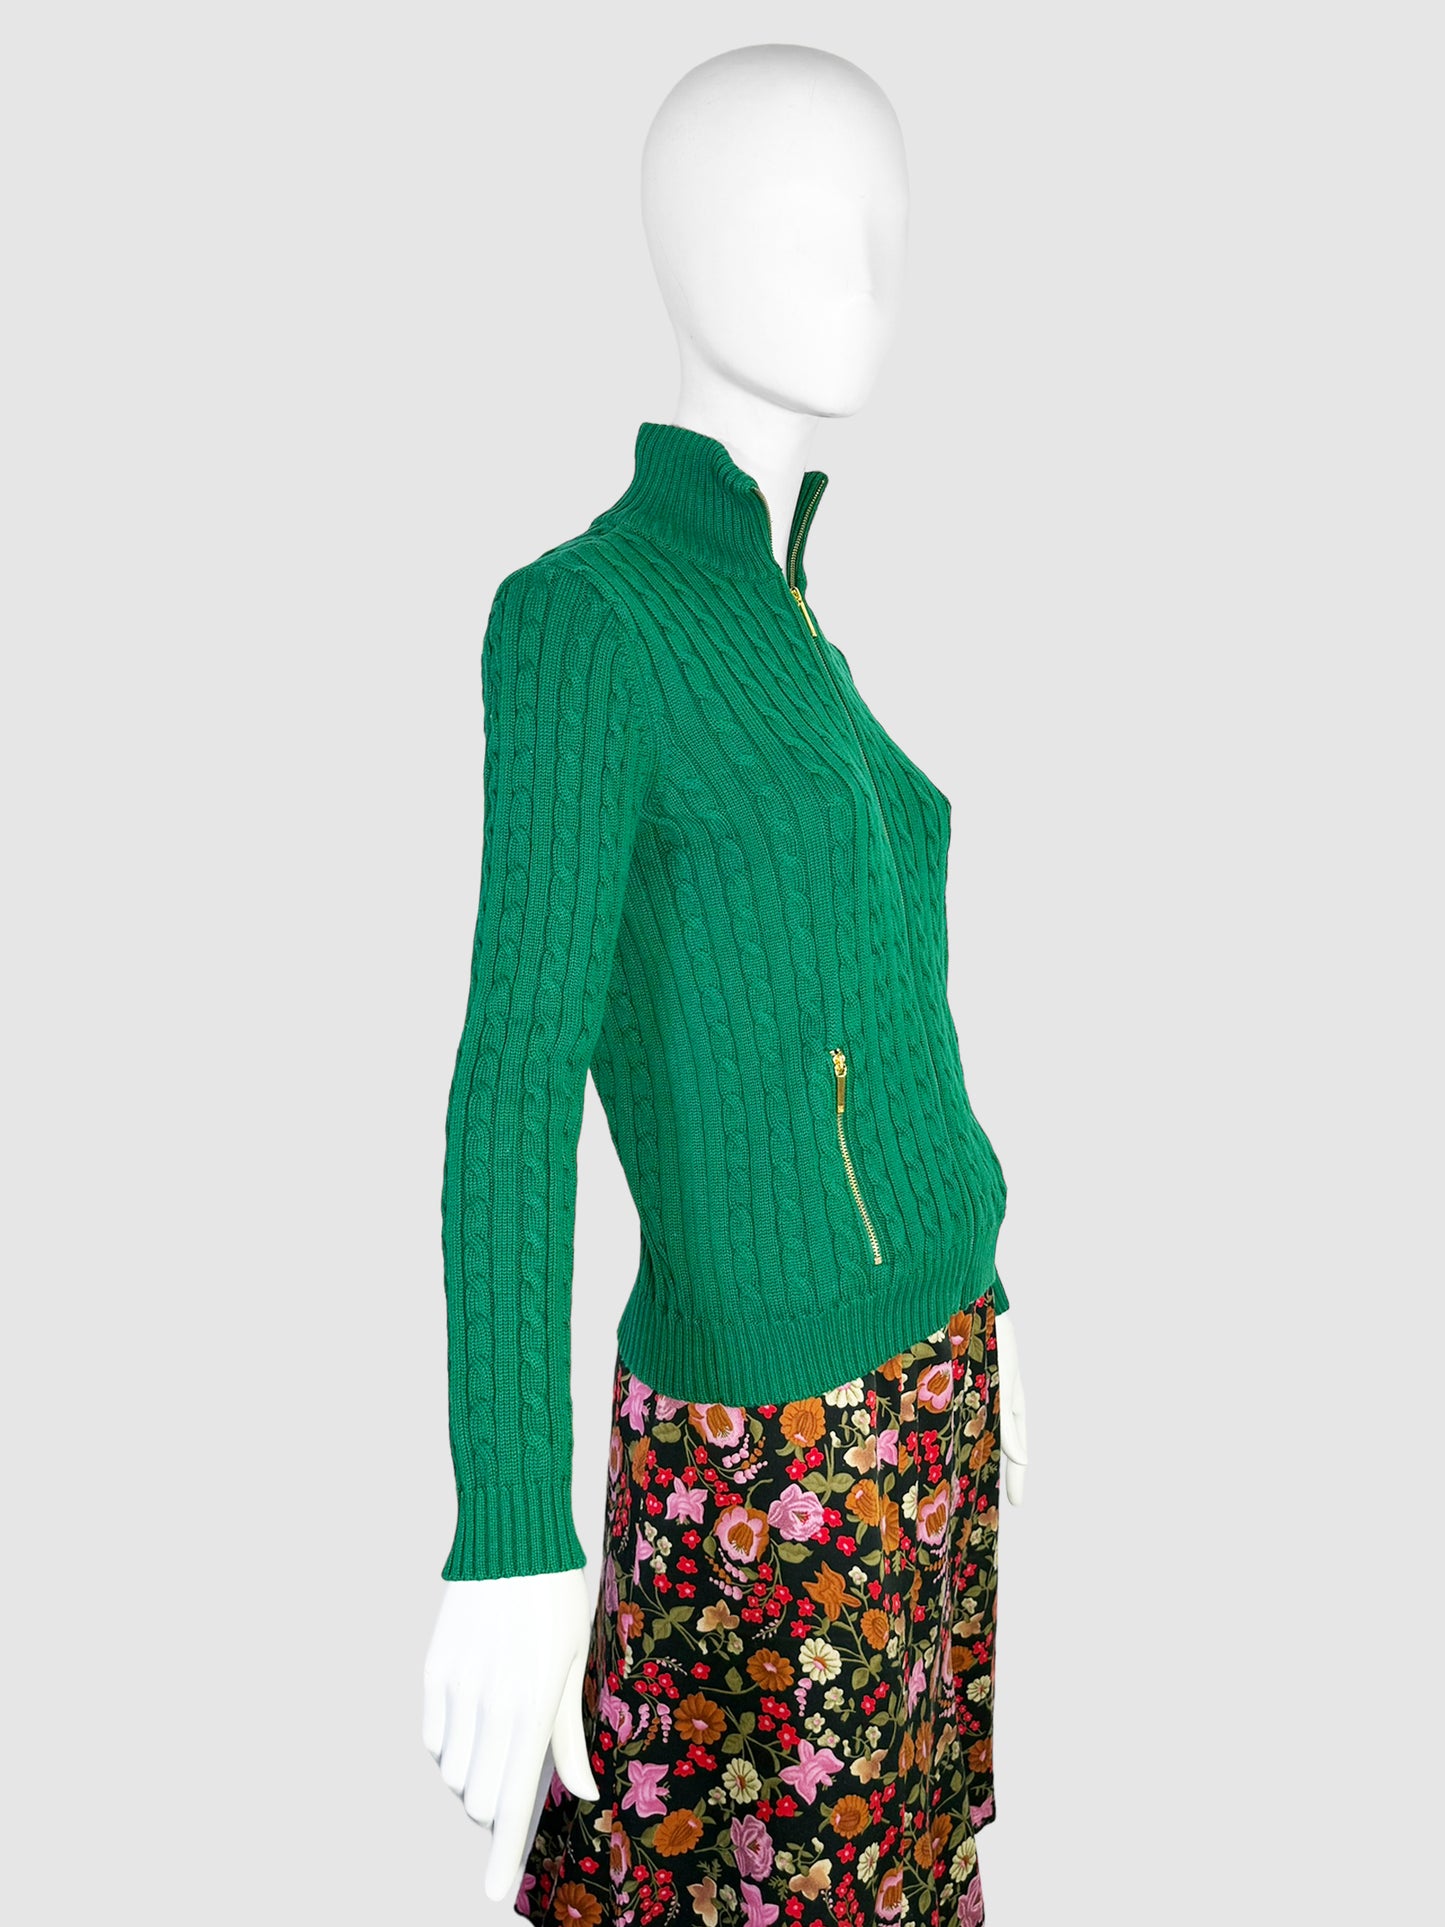 Ralph Lauren Zip-Up Knit Sweater - Size S